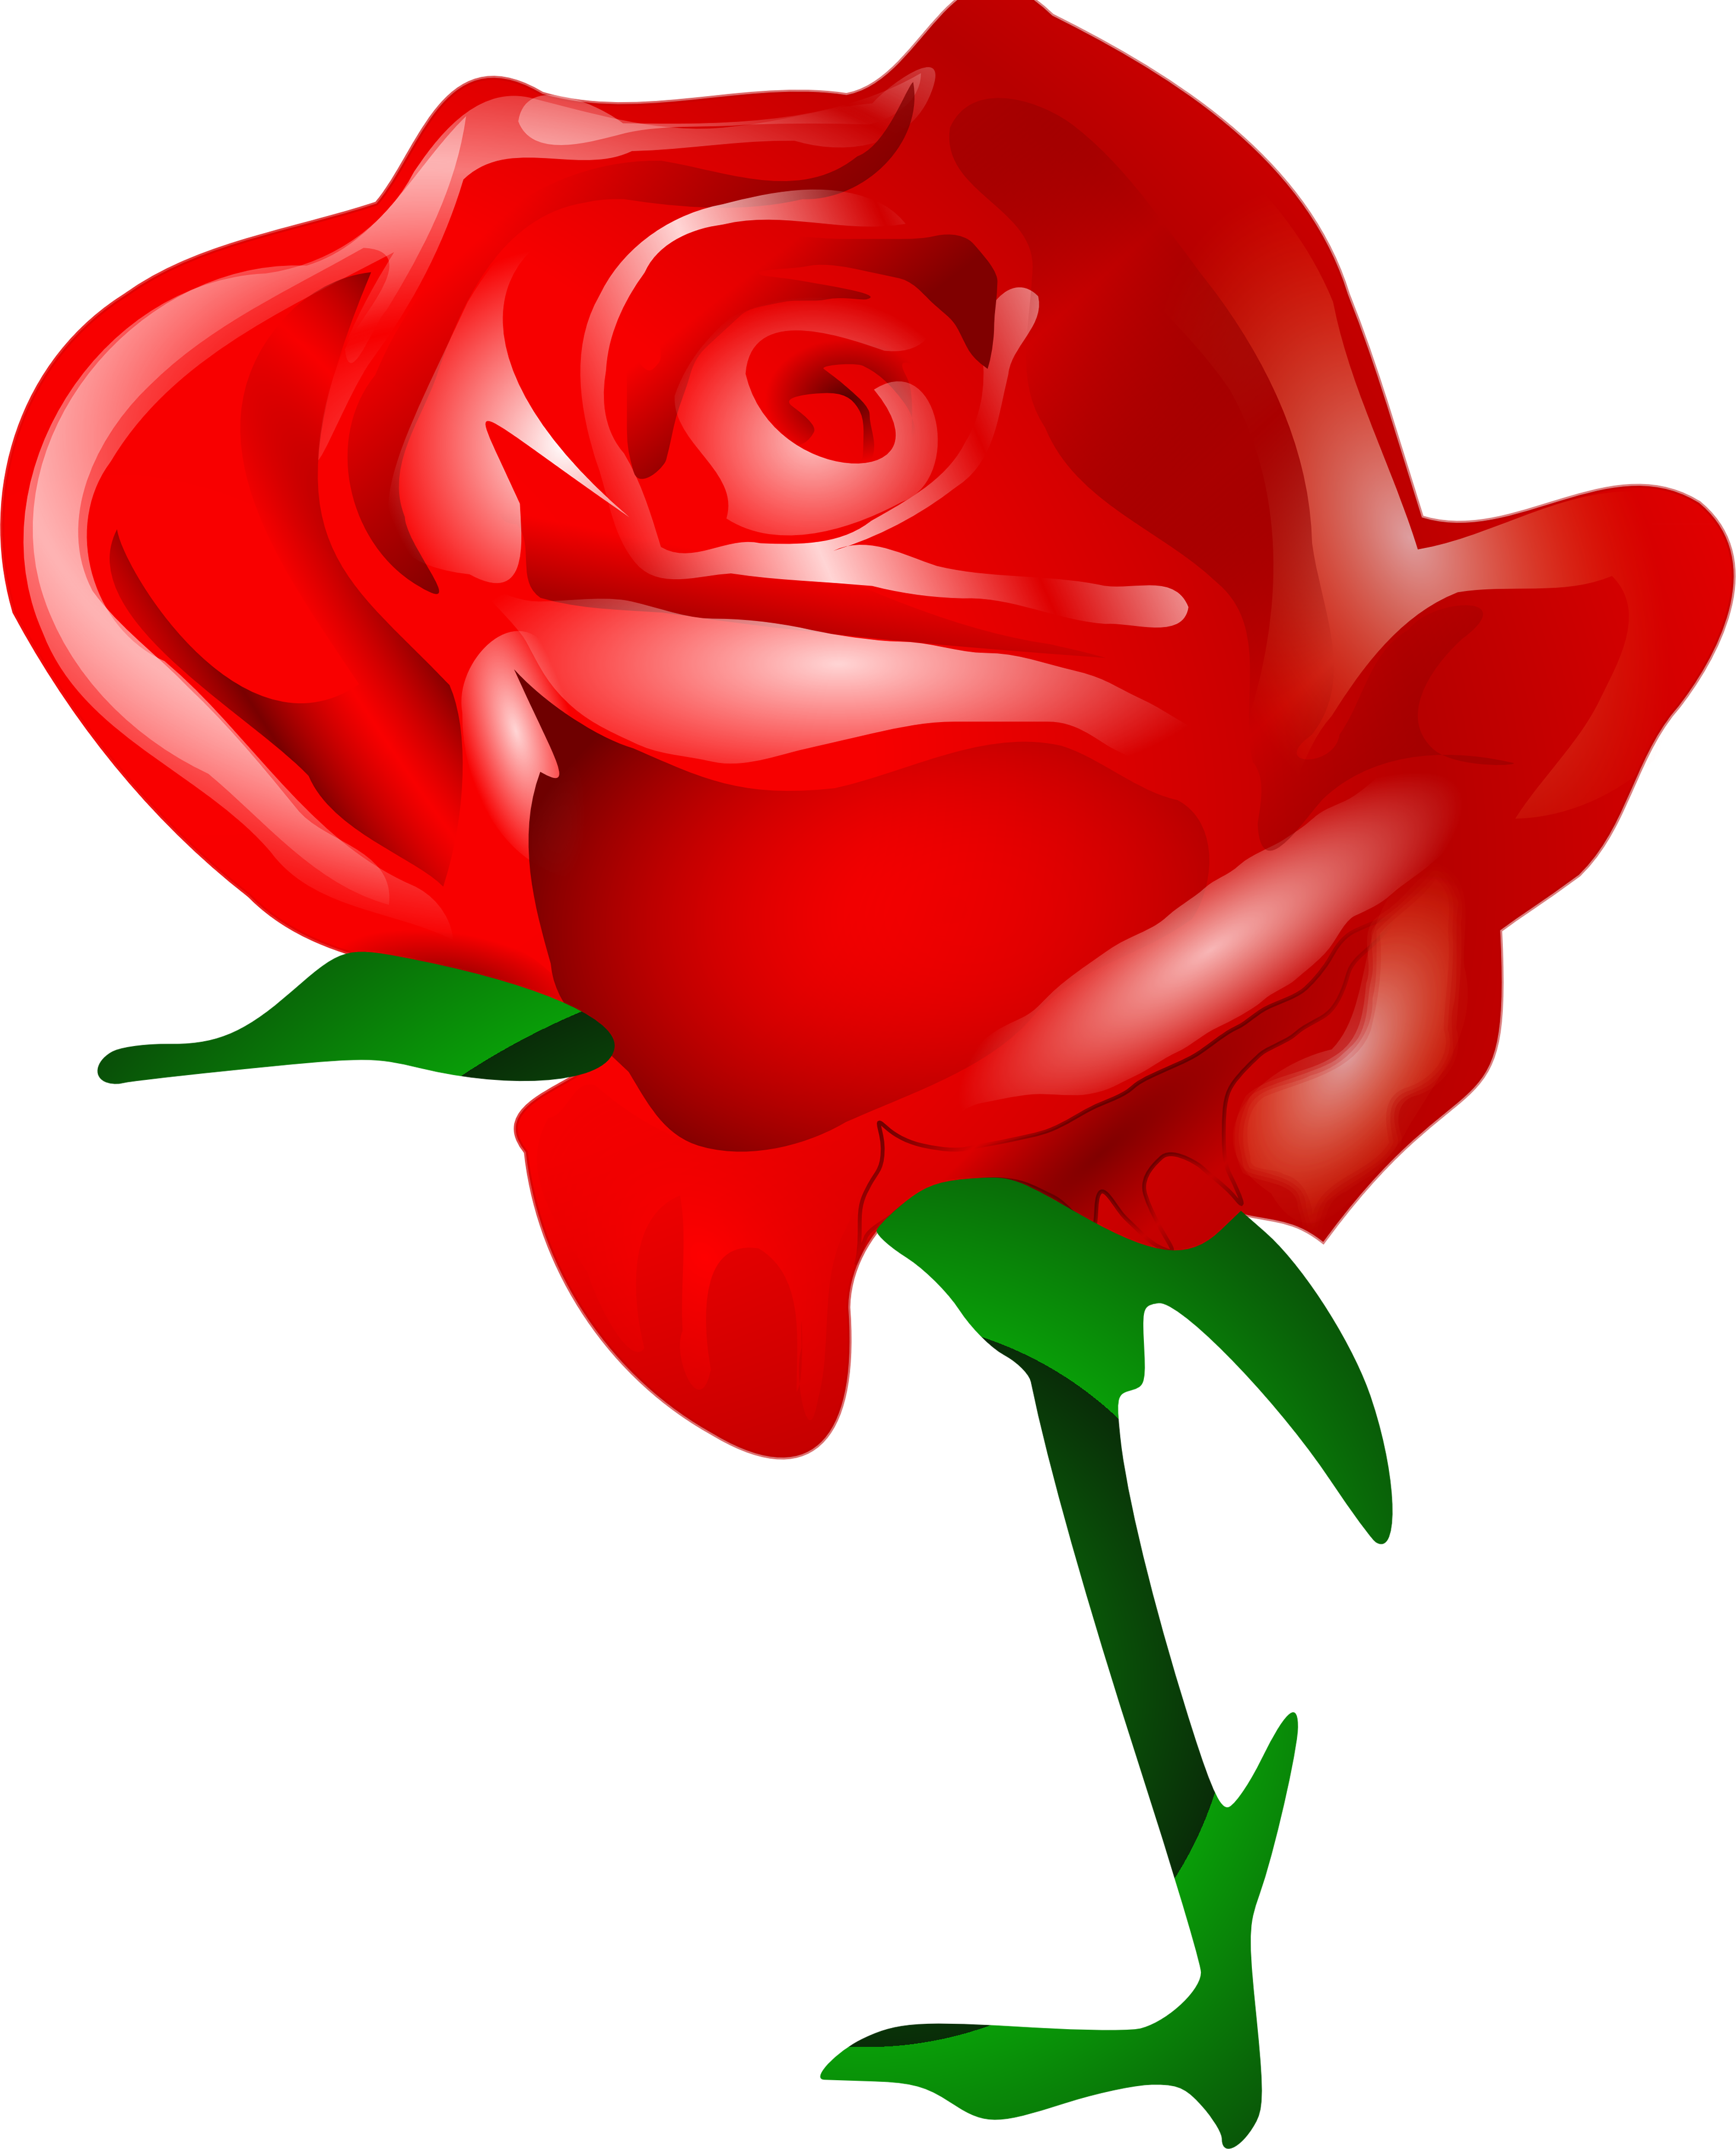 Rose PNG flower images, free download